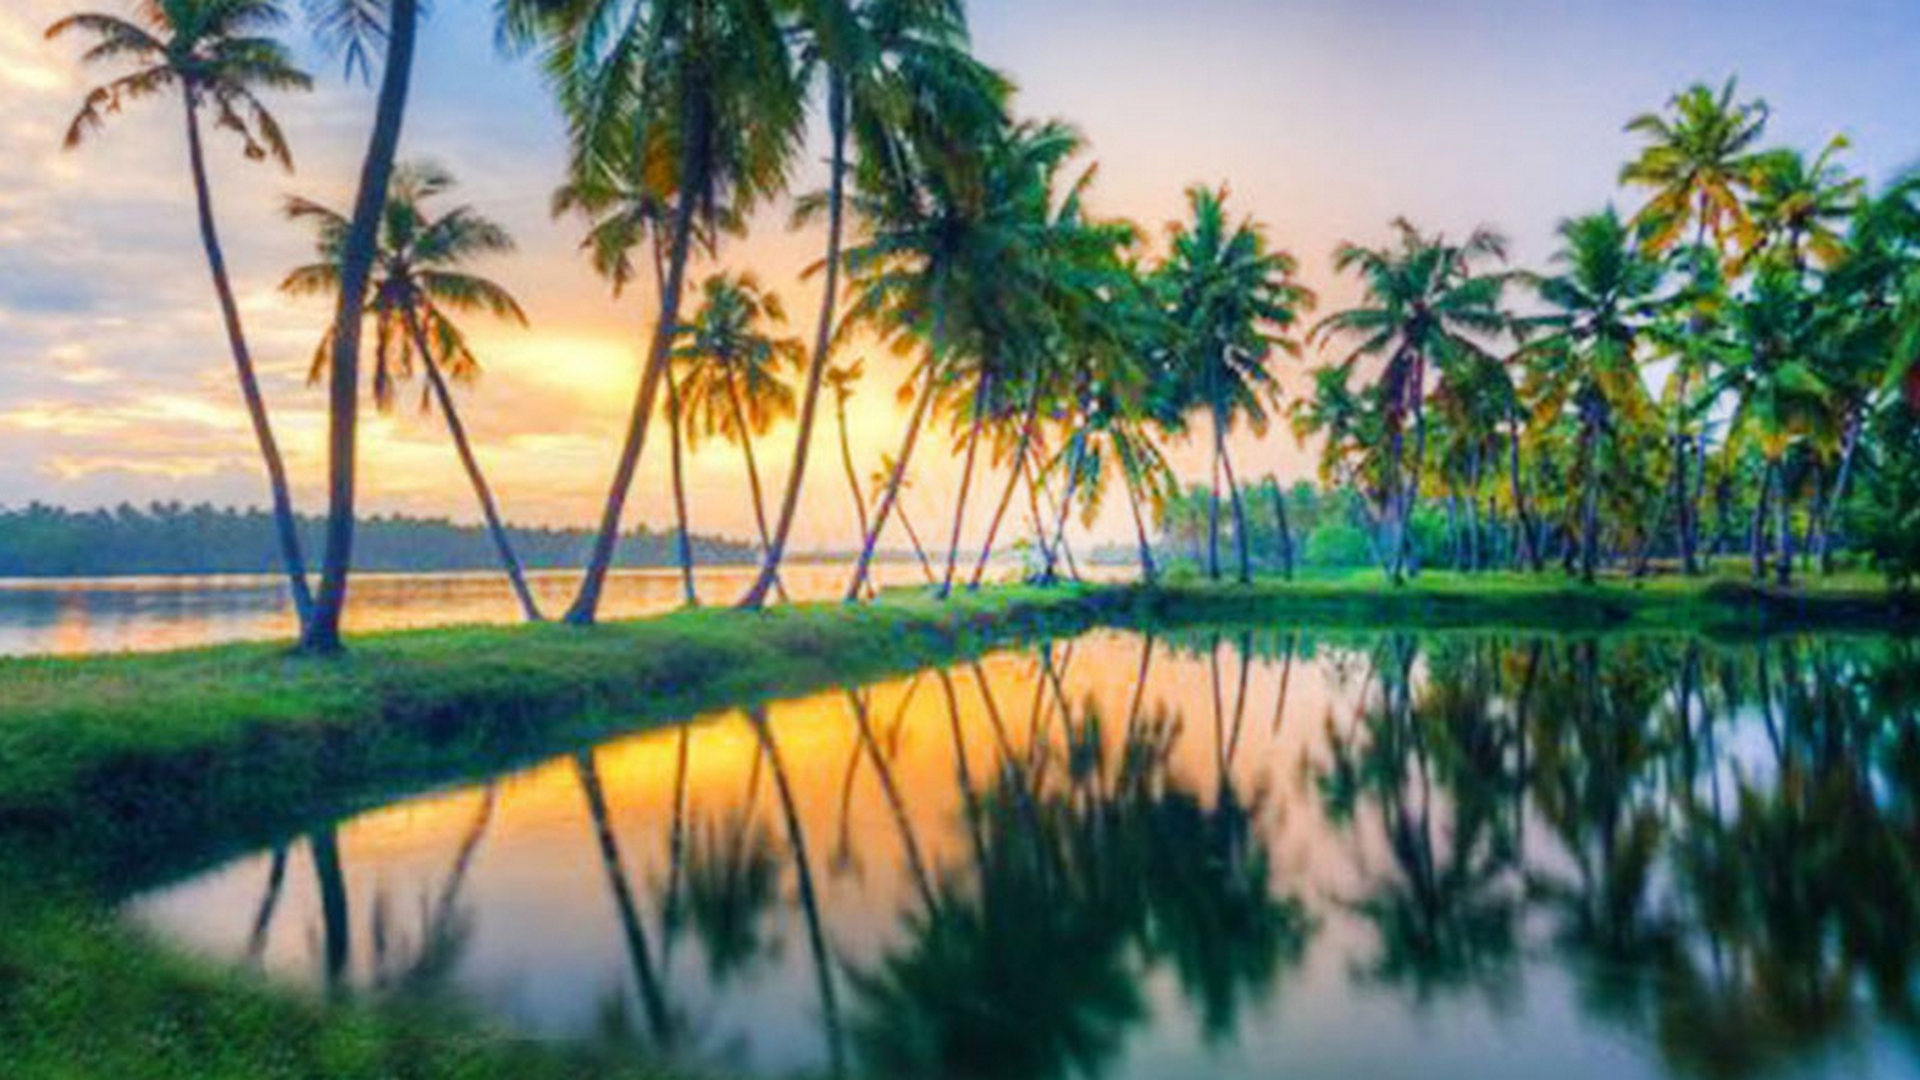 Kerala Image That Will Make You Want To Visit Kerala